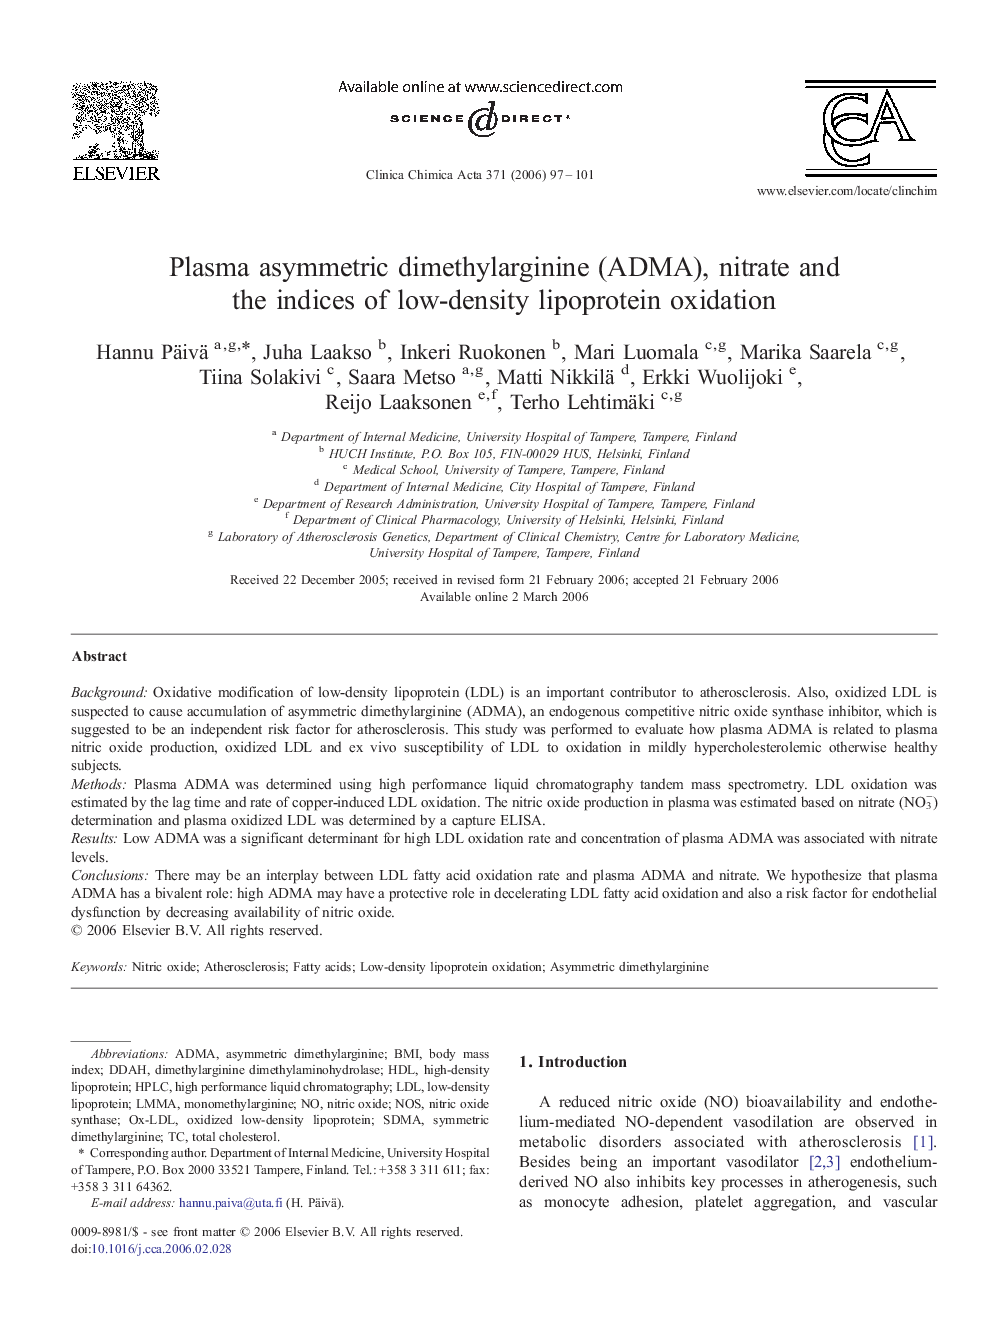 Plasma asymmetric dimethylarginine (ADMA), nitrate and the indices of low-density lipoprotein oxidation